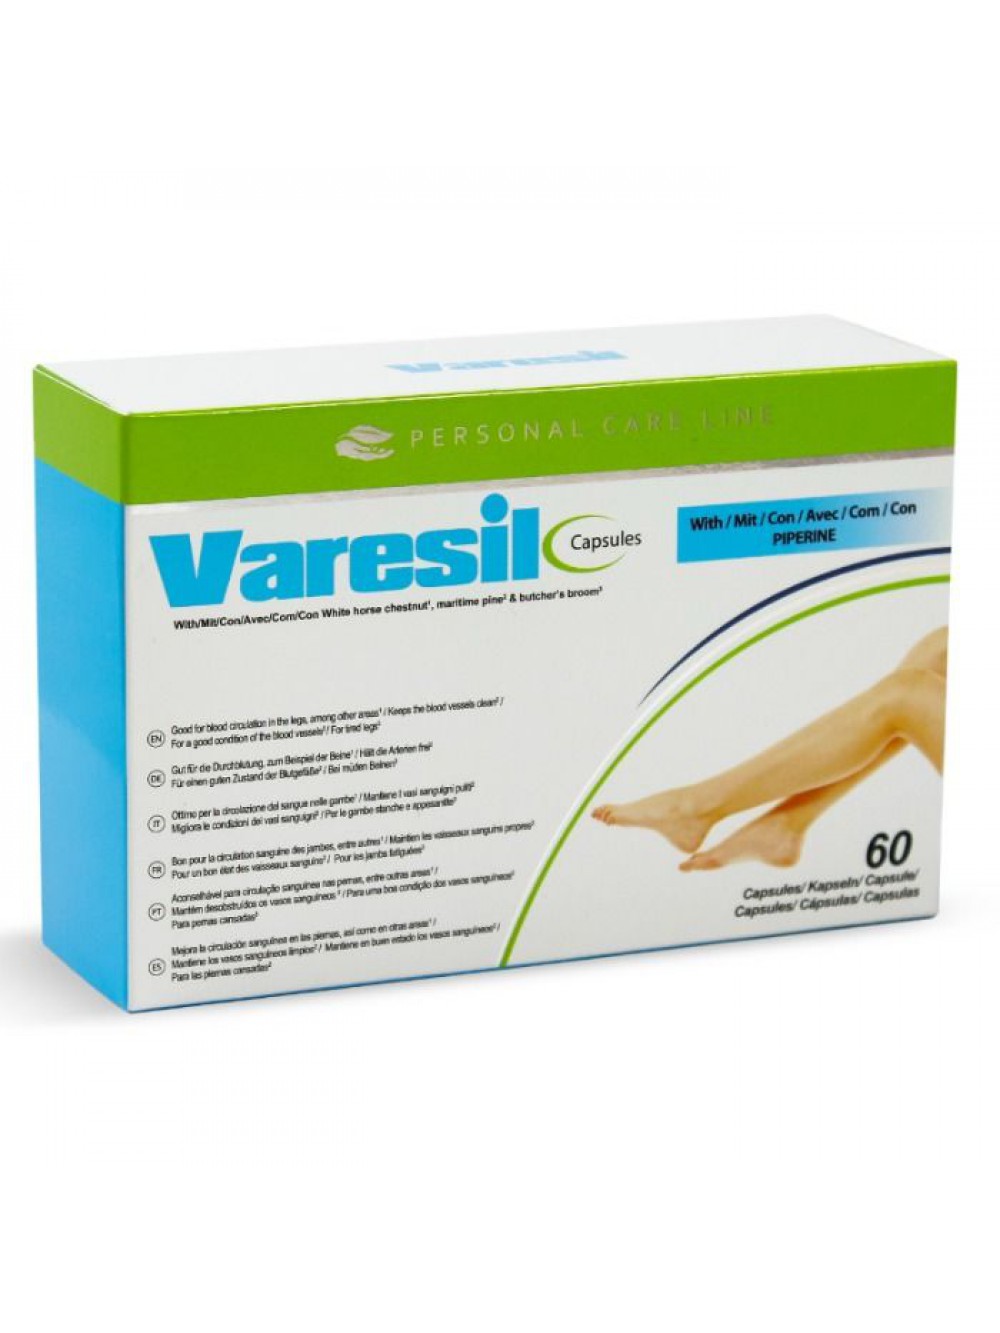 VARESIL PILLS TREATMENT FOR VARICOSE VEIN 8437012718074